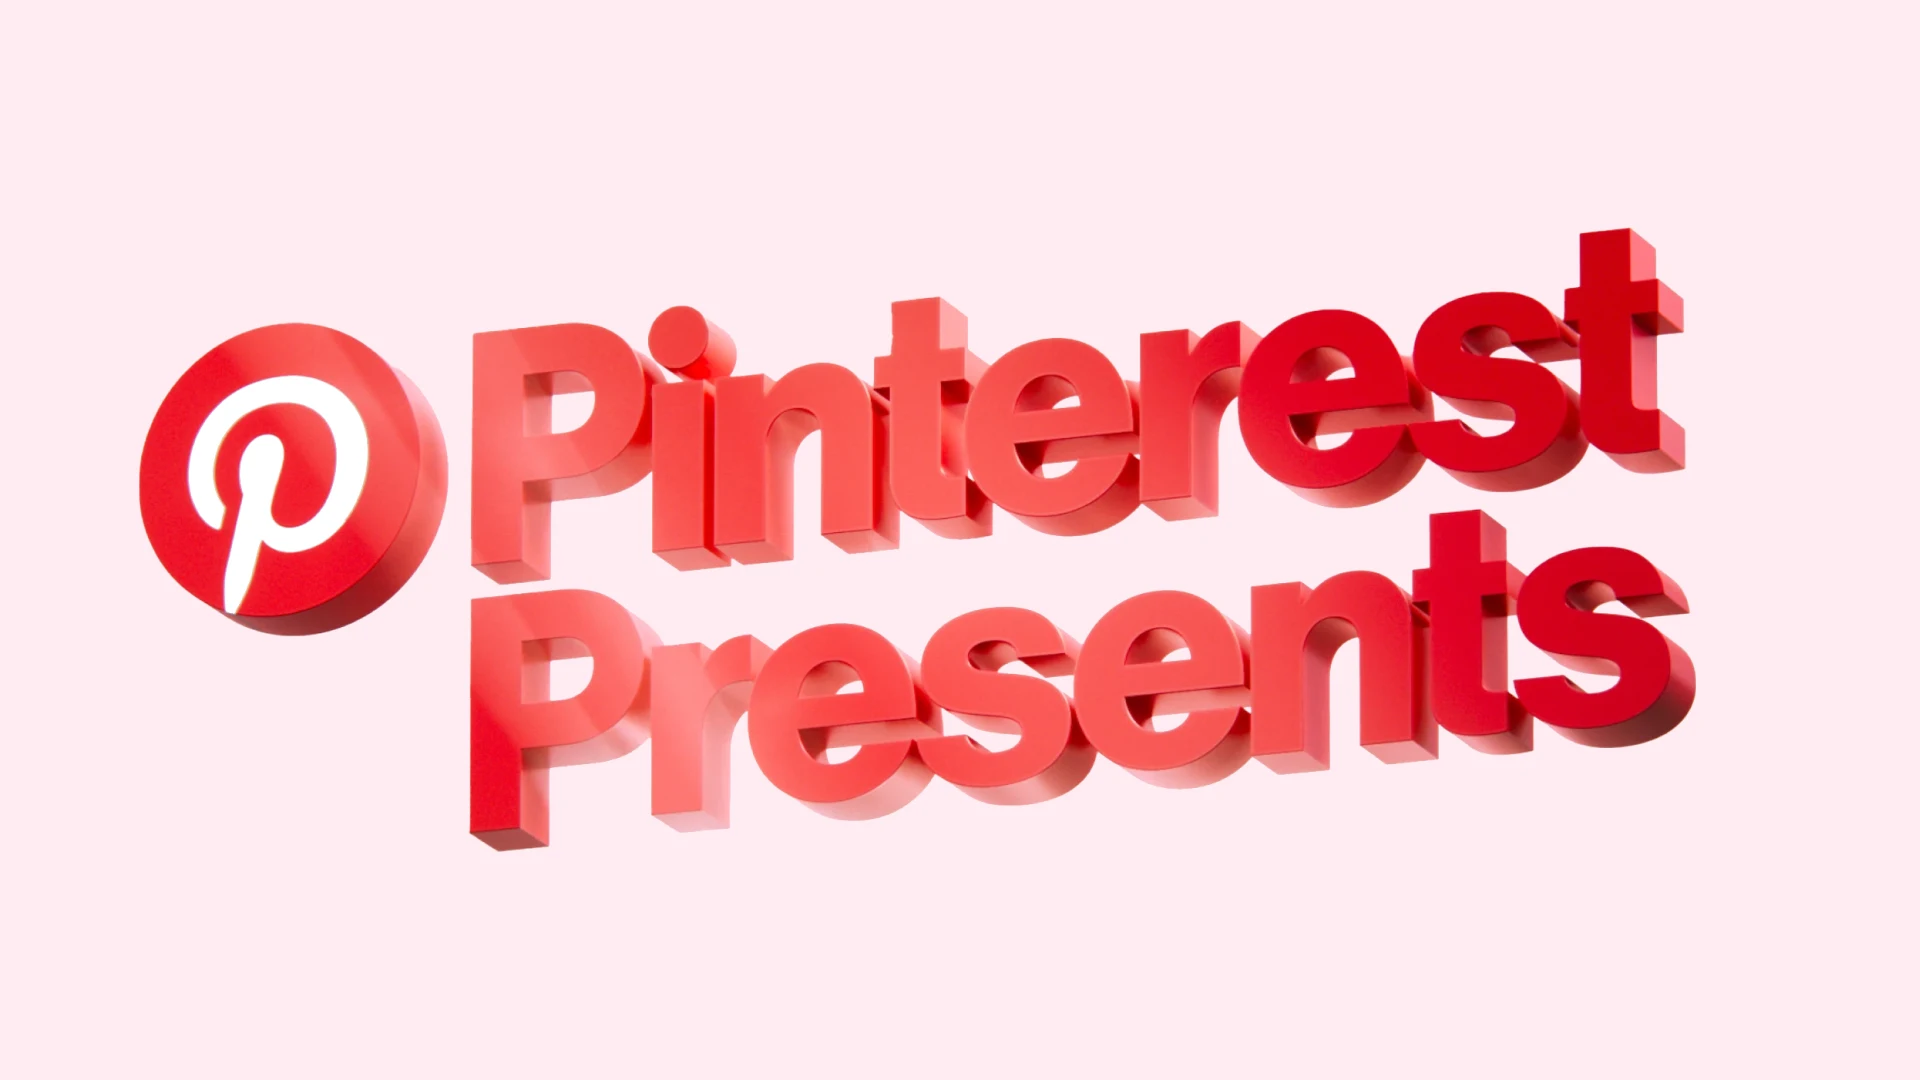 A 3D logo for Pinterest Presents